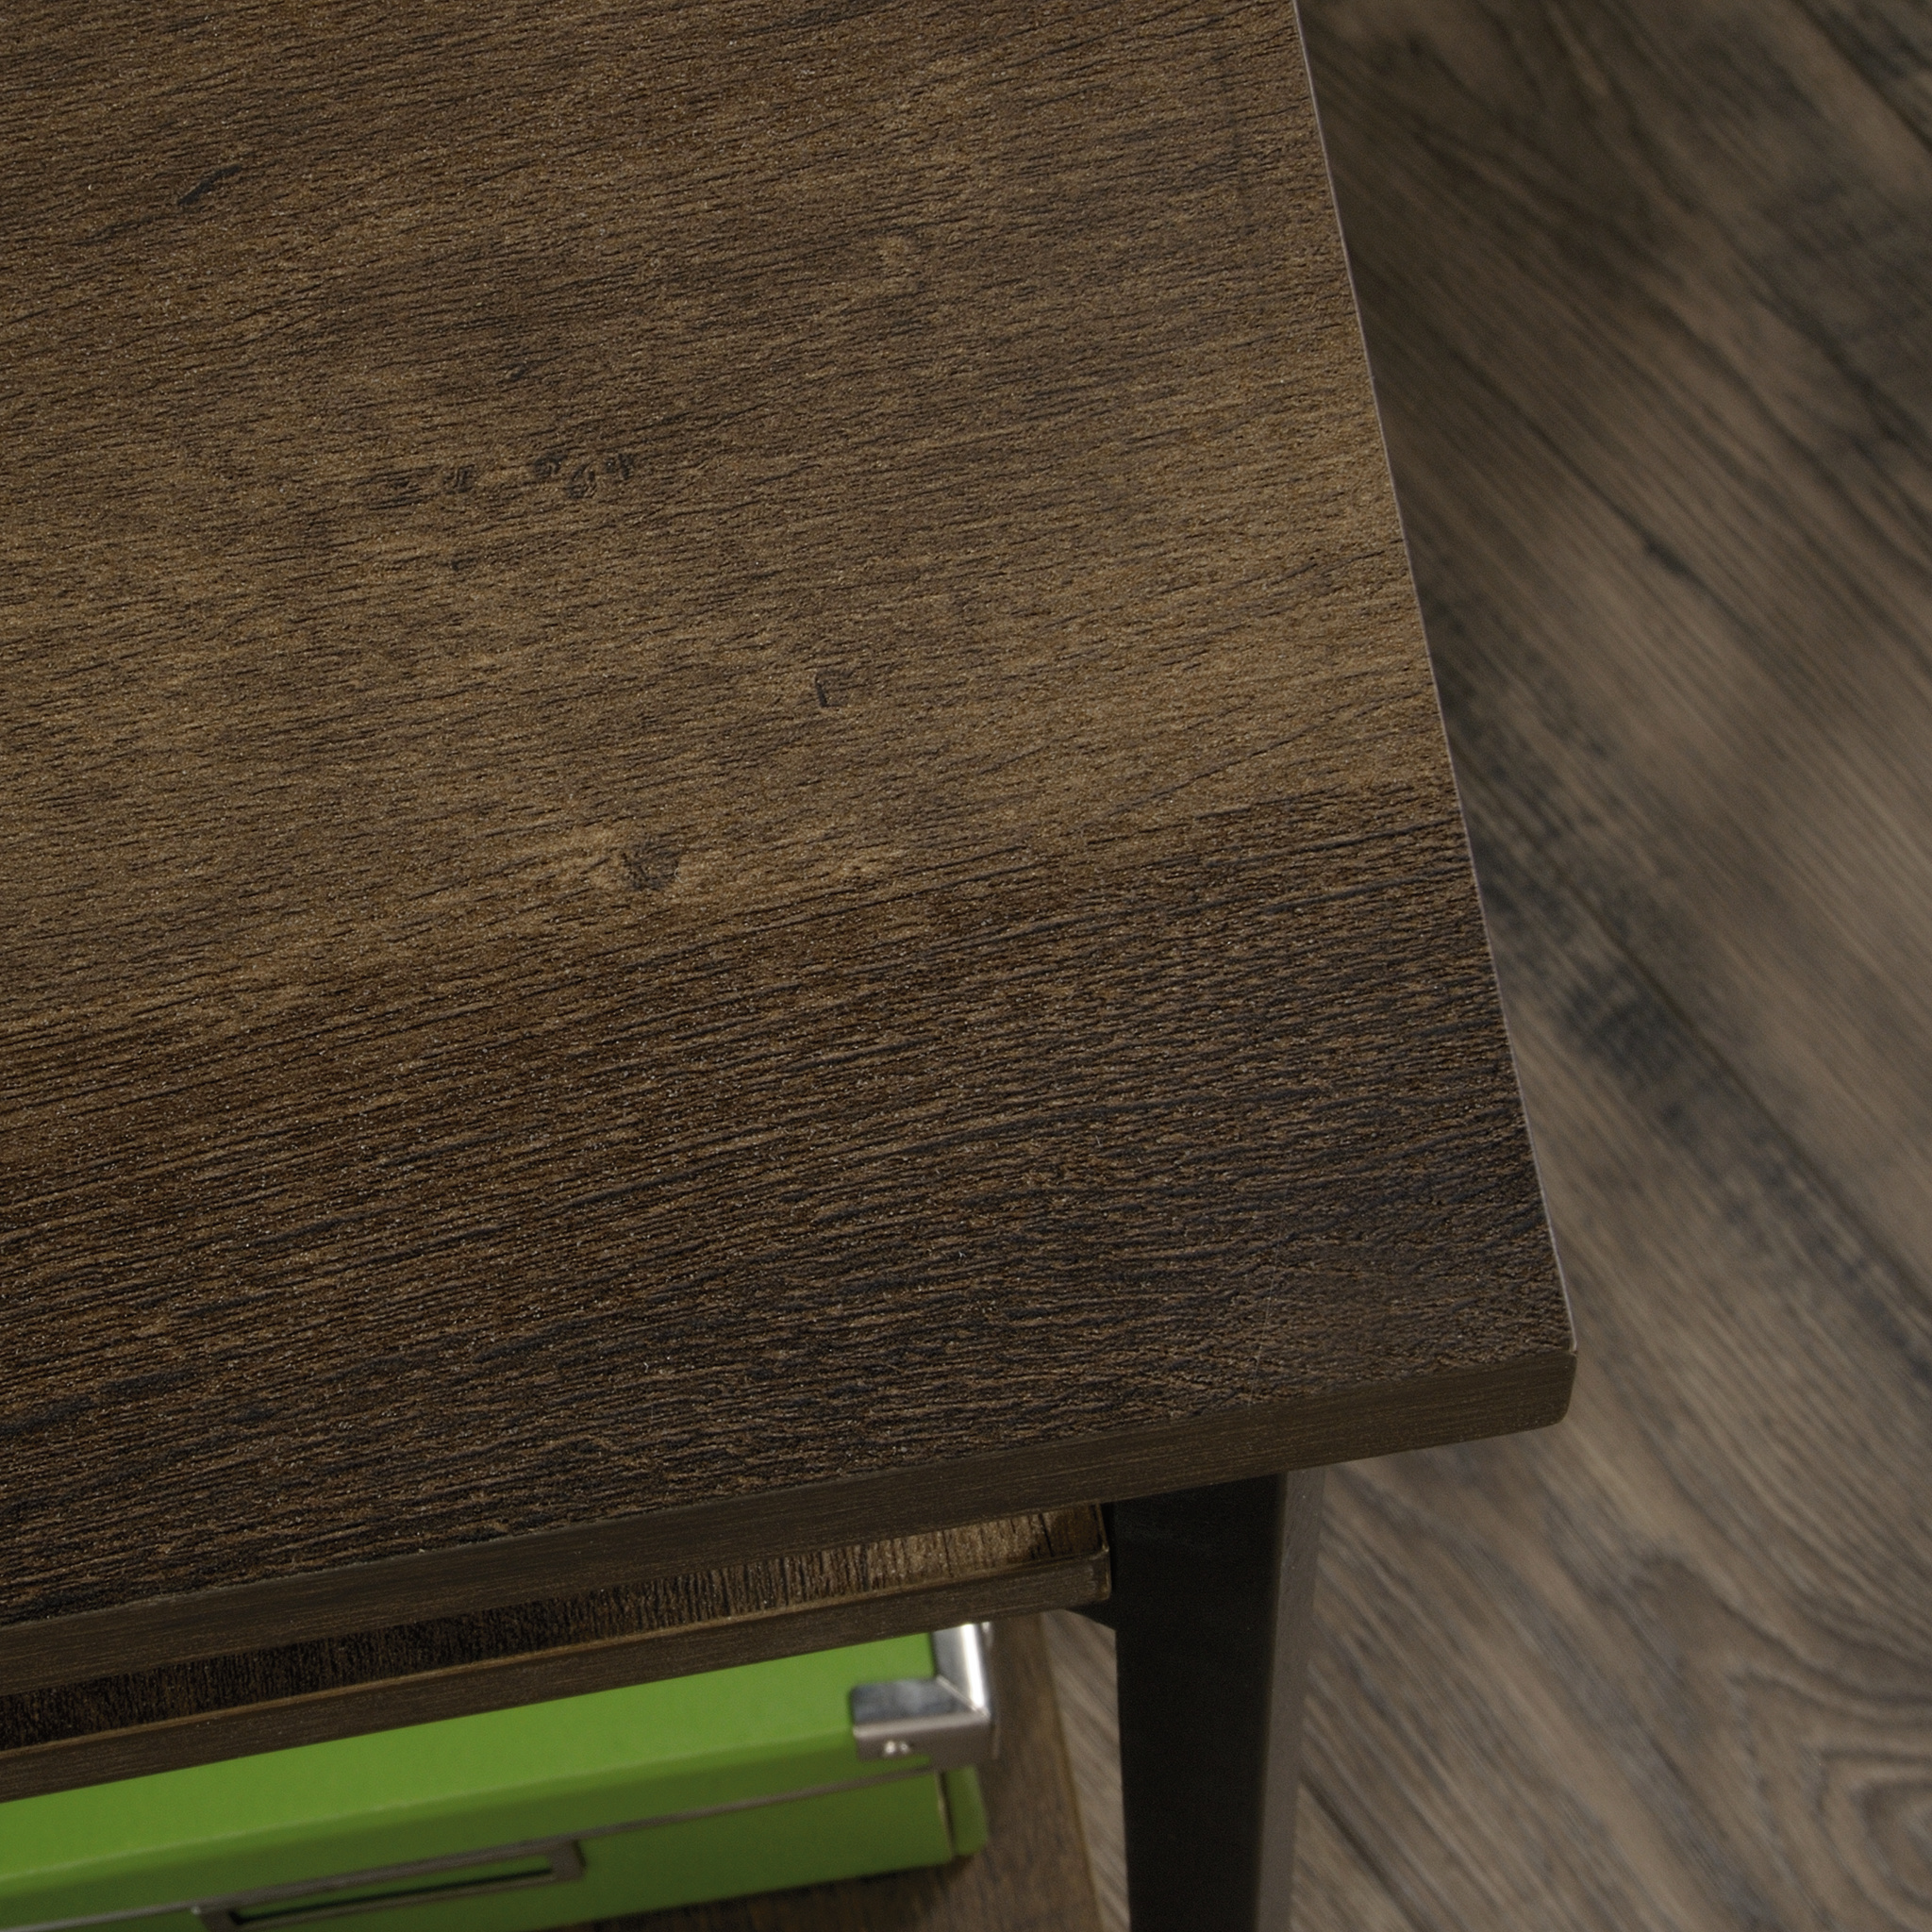 Curiod Open Shelf Wood and Metal L-Shaped Desk, Smoked Oak Finish - image 4 of 8